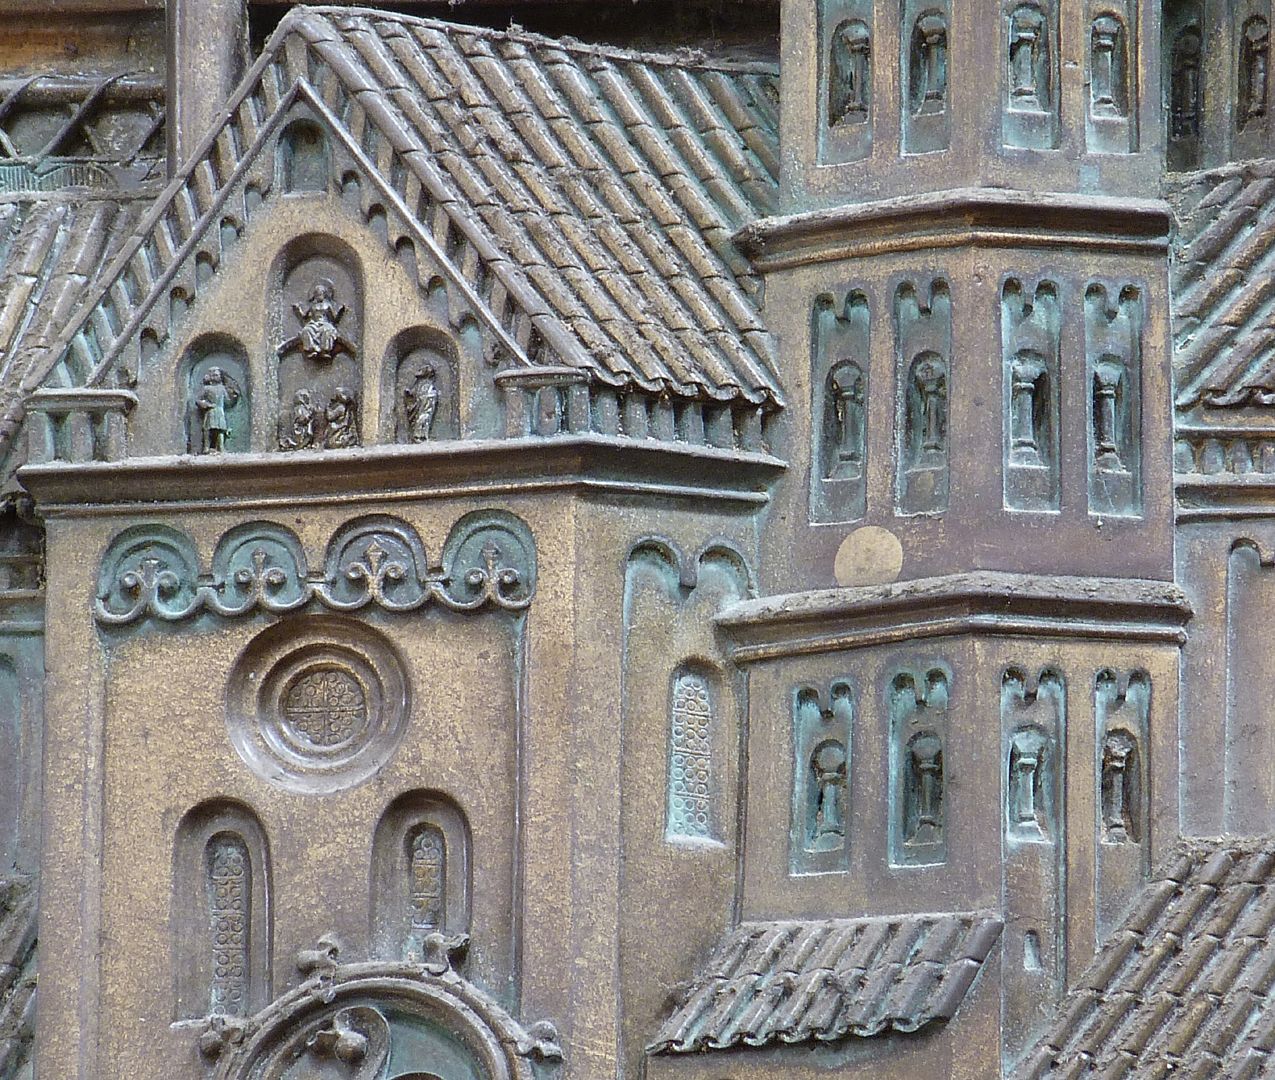 Memorial panel for Hariolf and Erlolf Kirchenmodell, südlicher Querhausgiebel und Südturm